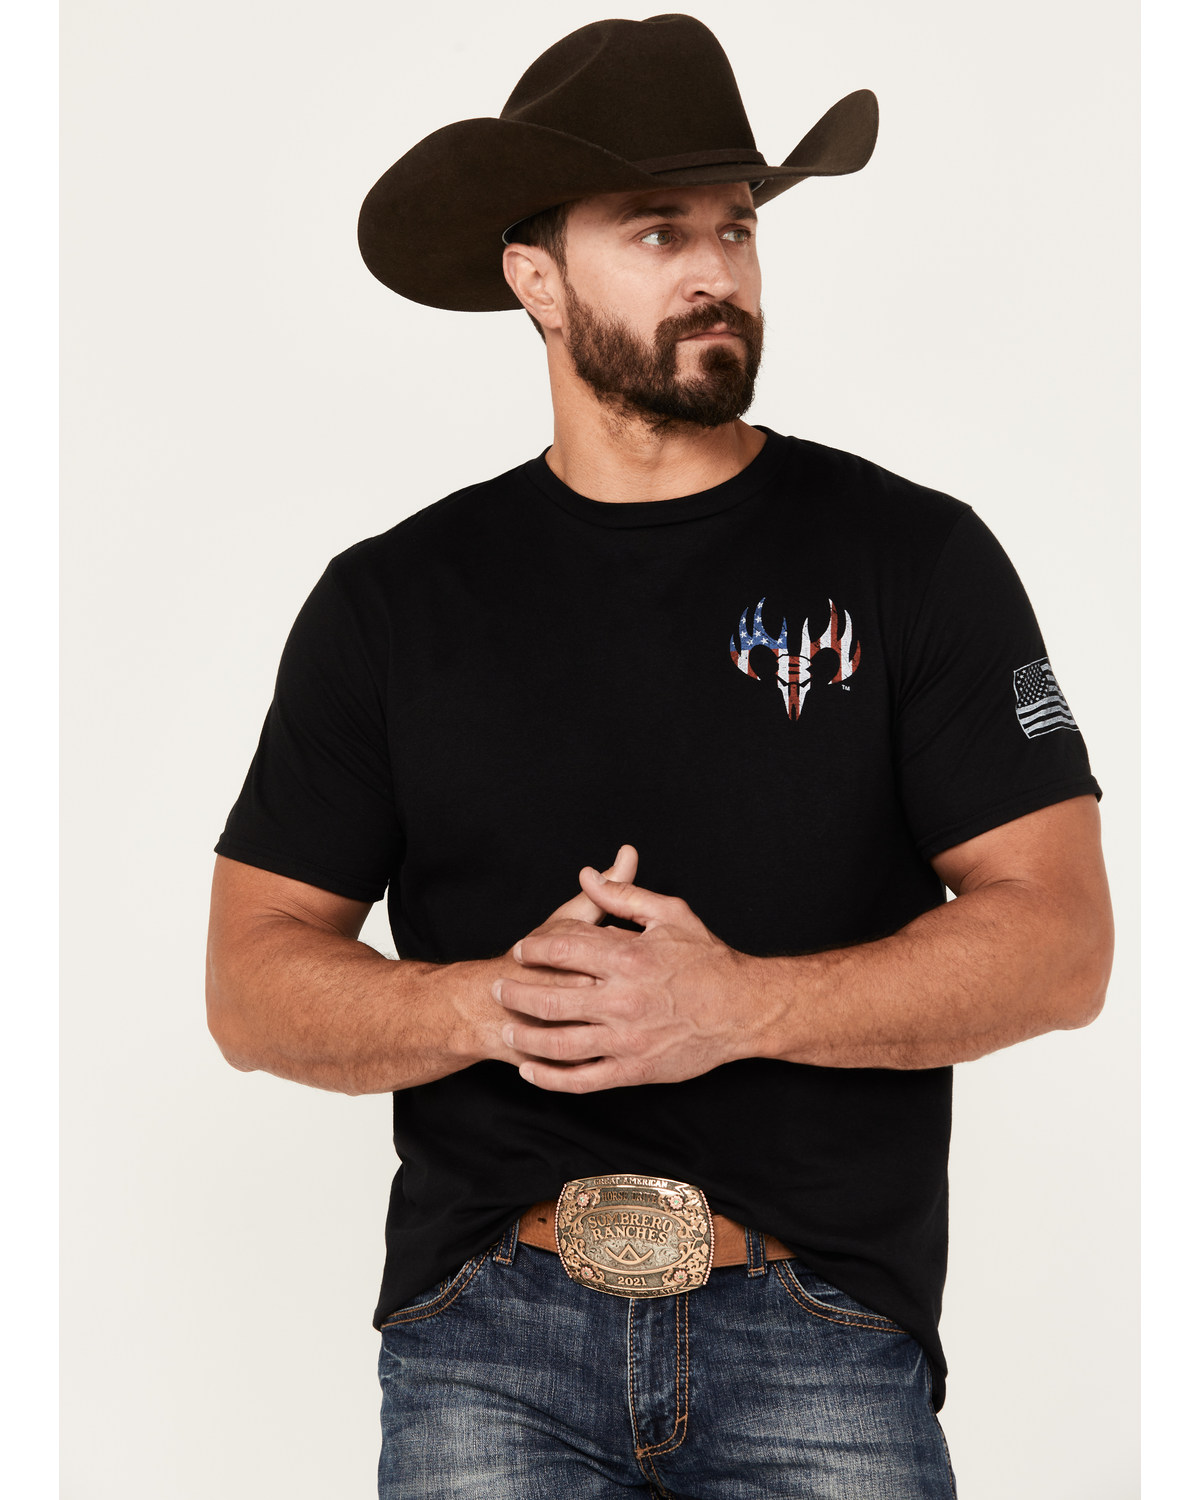 Buckwear Men's Defend Liberty Short Sleeve Graphic T-Shirt